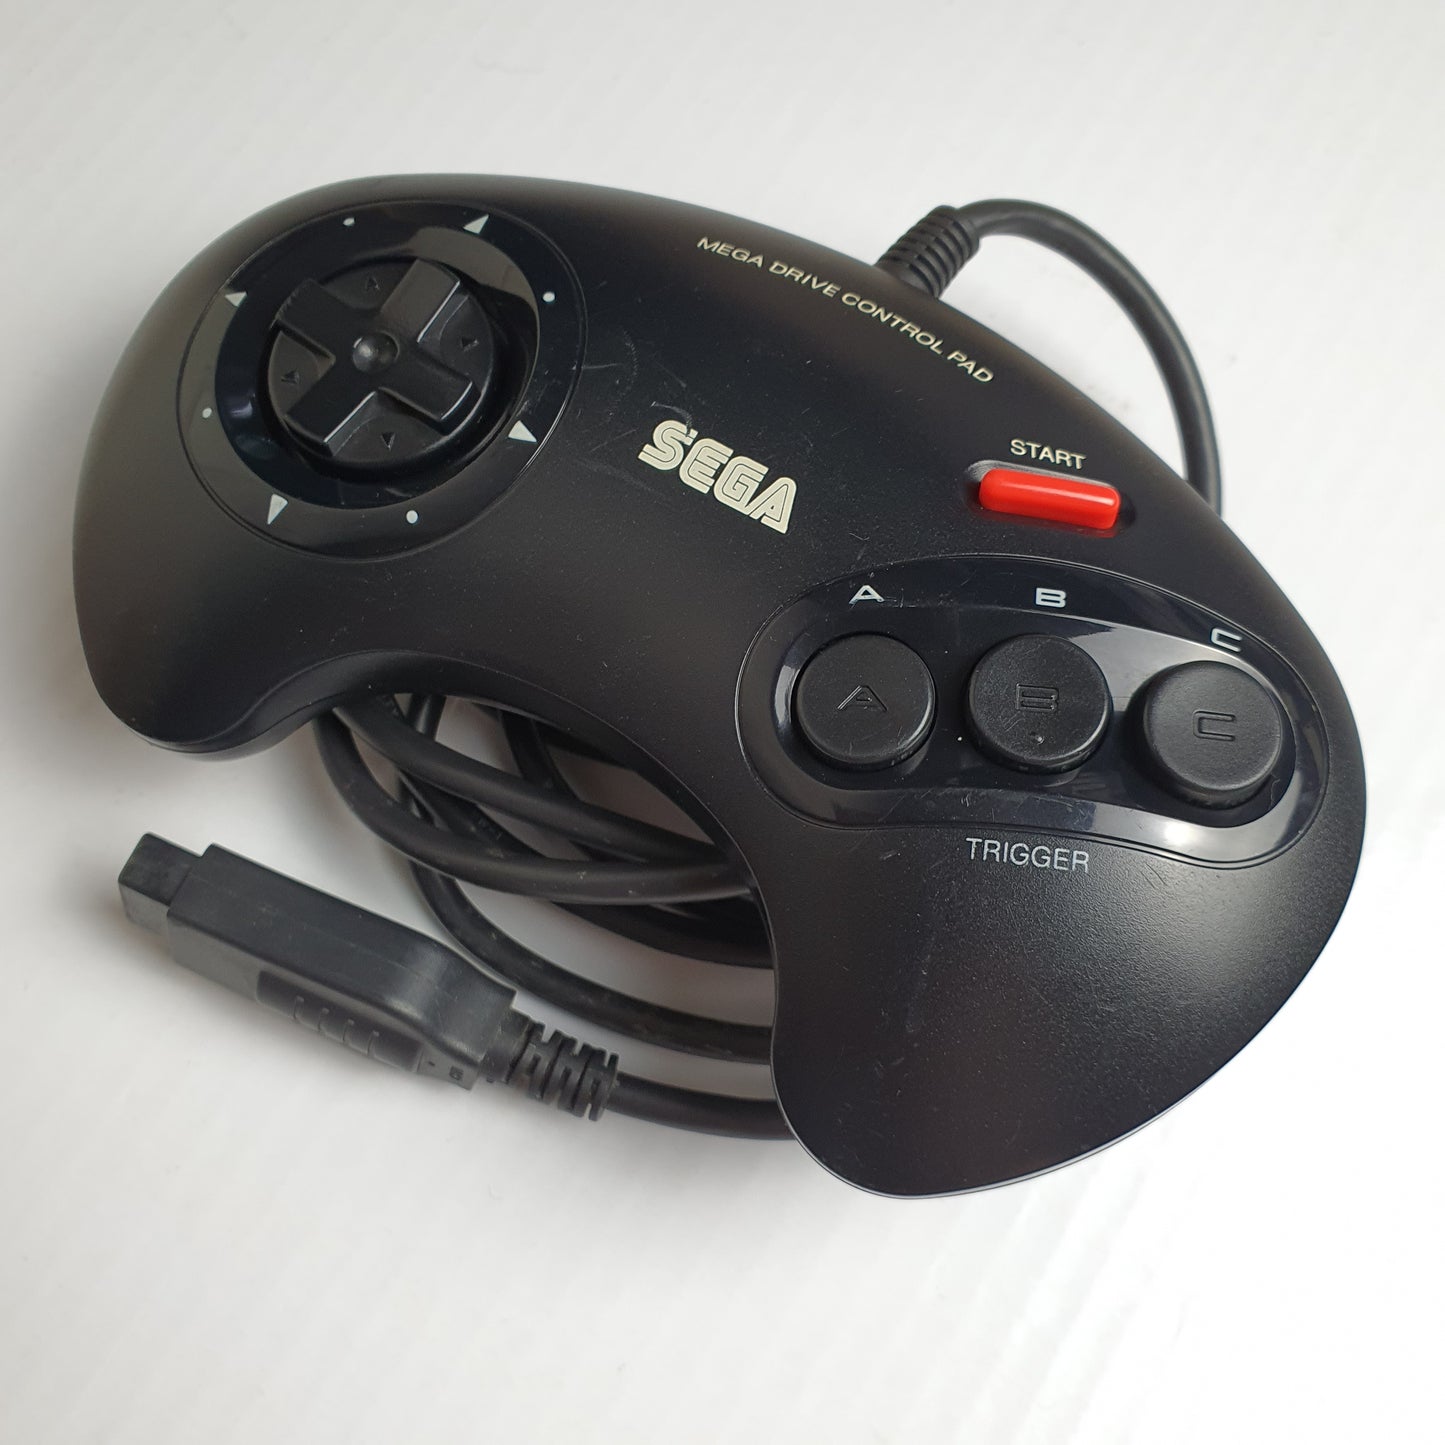 Official Sega Mega Drive Wired Black/Red Controller 1650-50